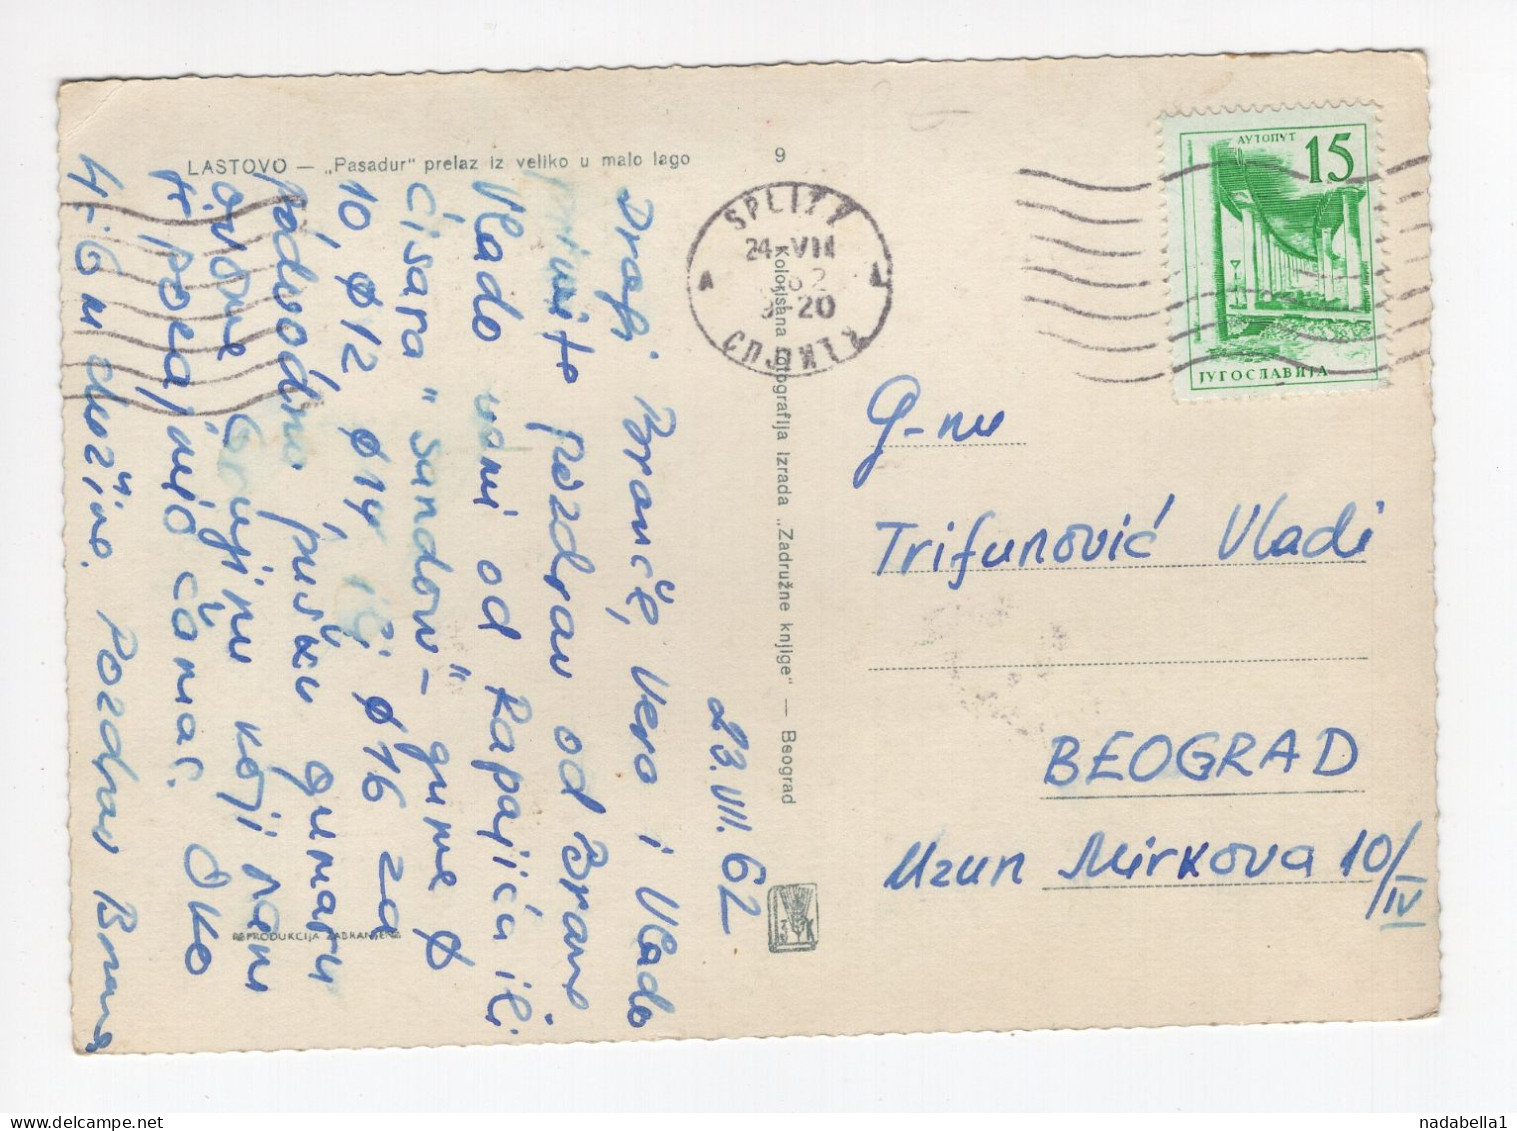 1962. YUGOSLAVIA,CROATIA,LASTOVO,PASADUR,POSTCARD,USED - Jugoslavia